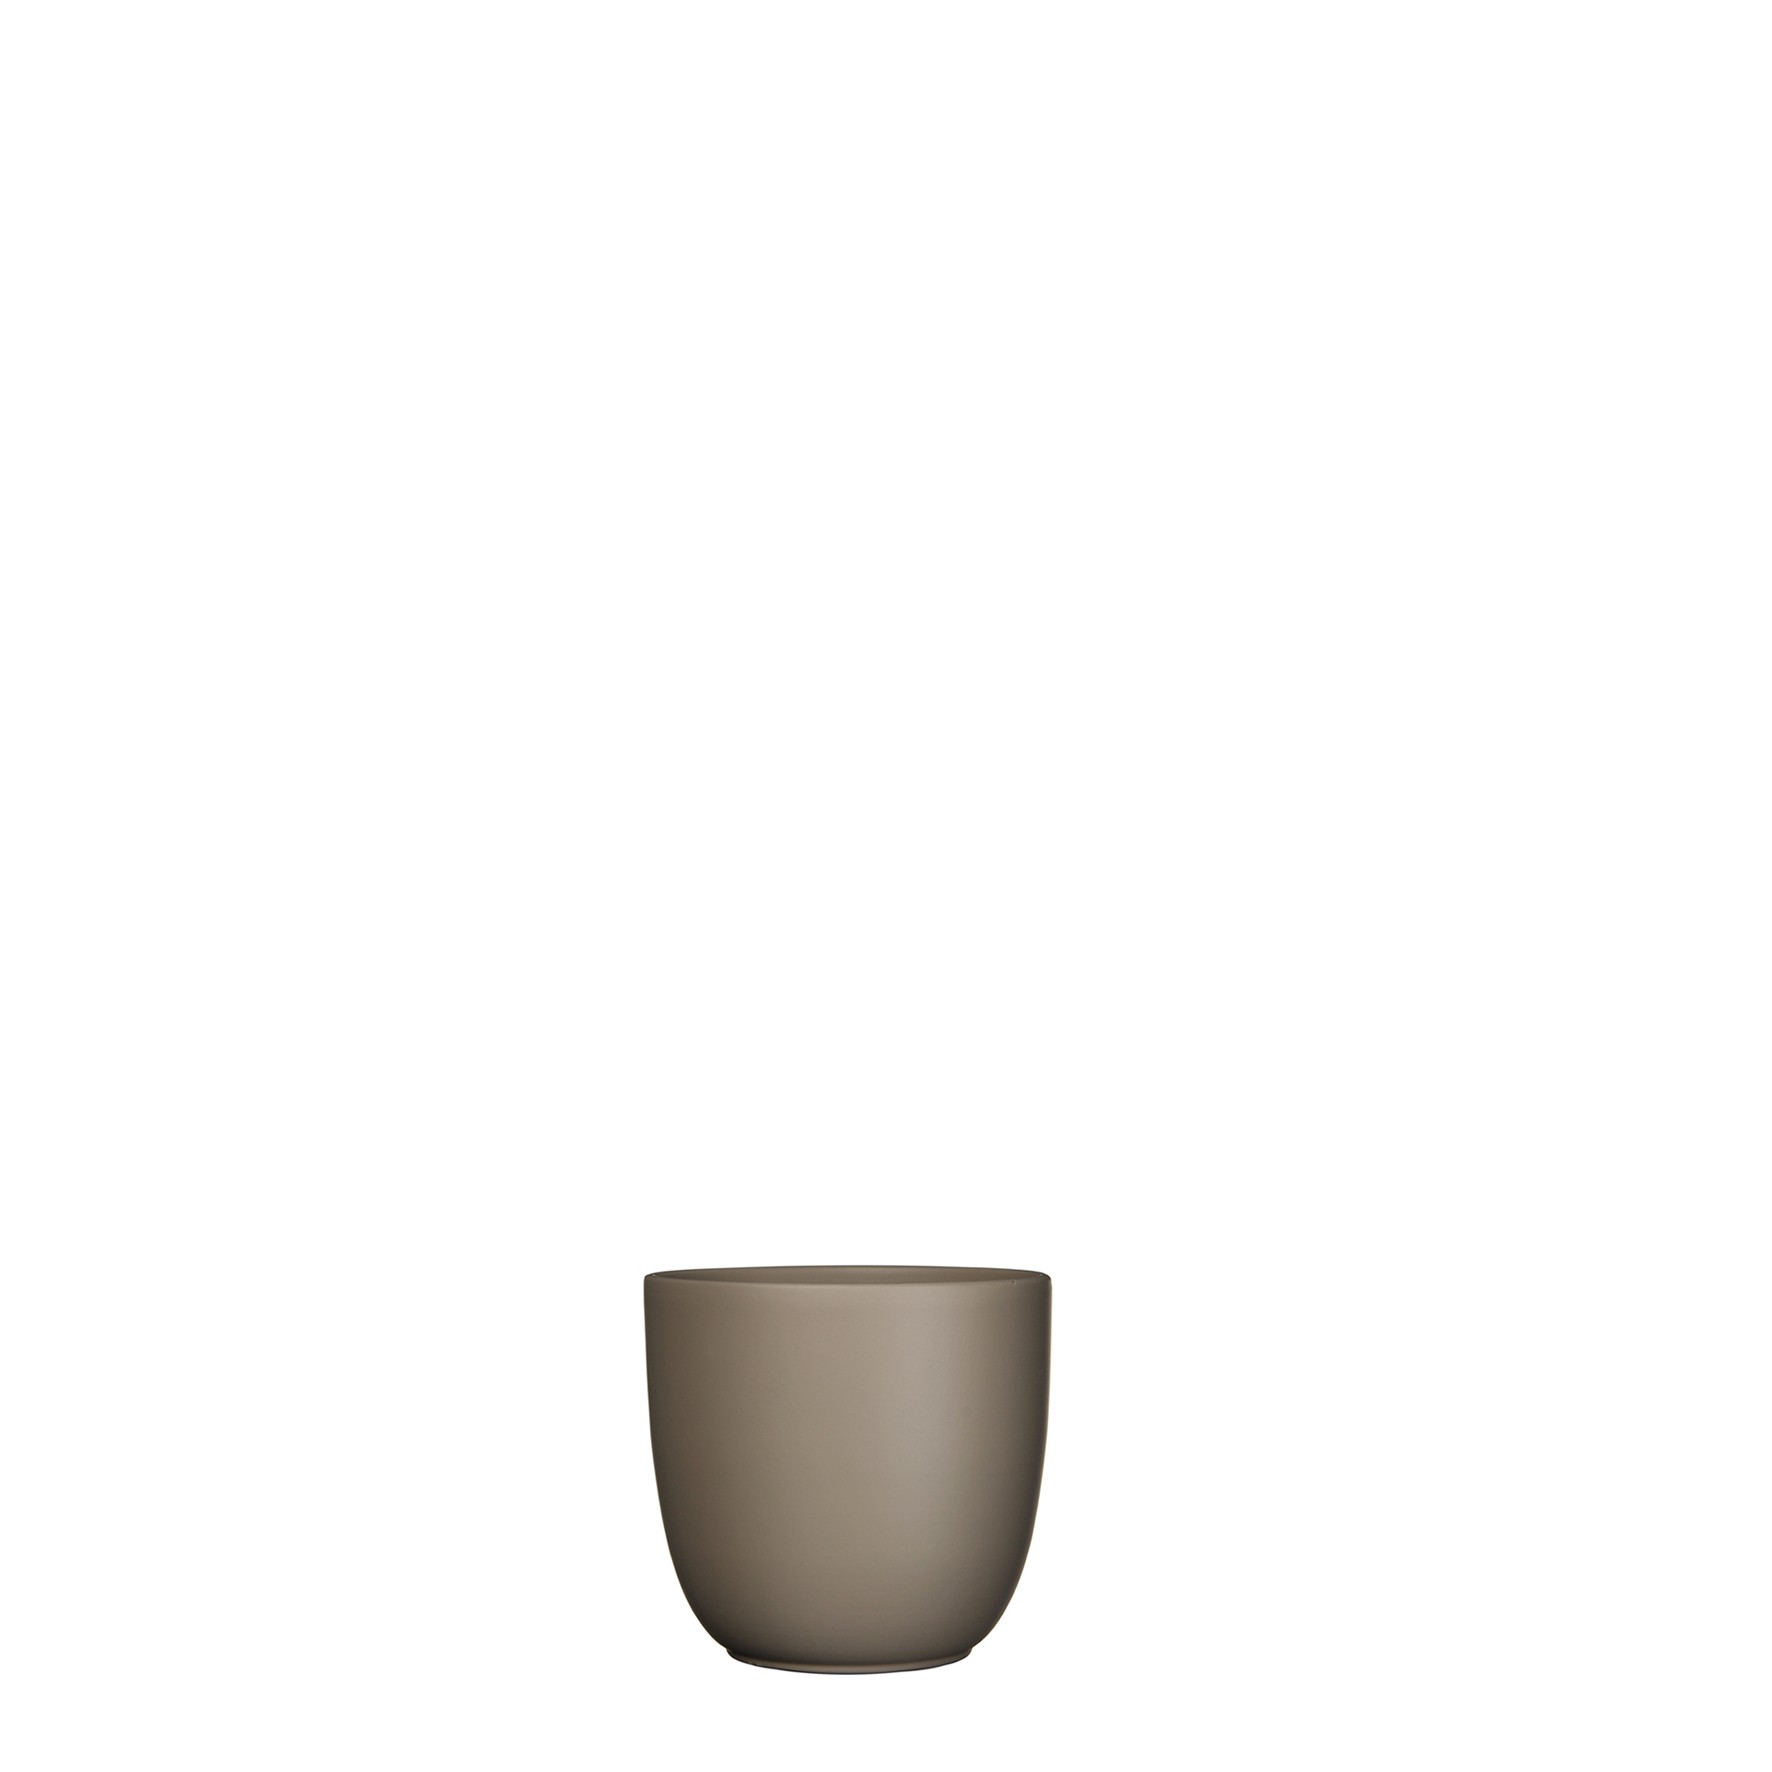 Bloempot Pot rond es/7 tusca 7.5 x 8.5 cm taupe mat Mica - Mica Decorations